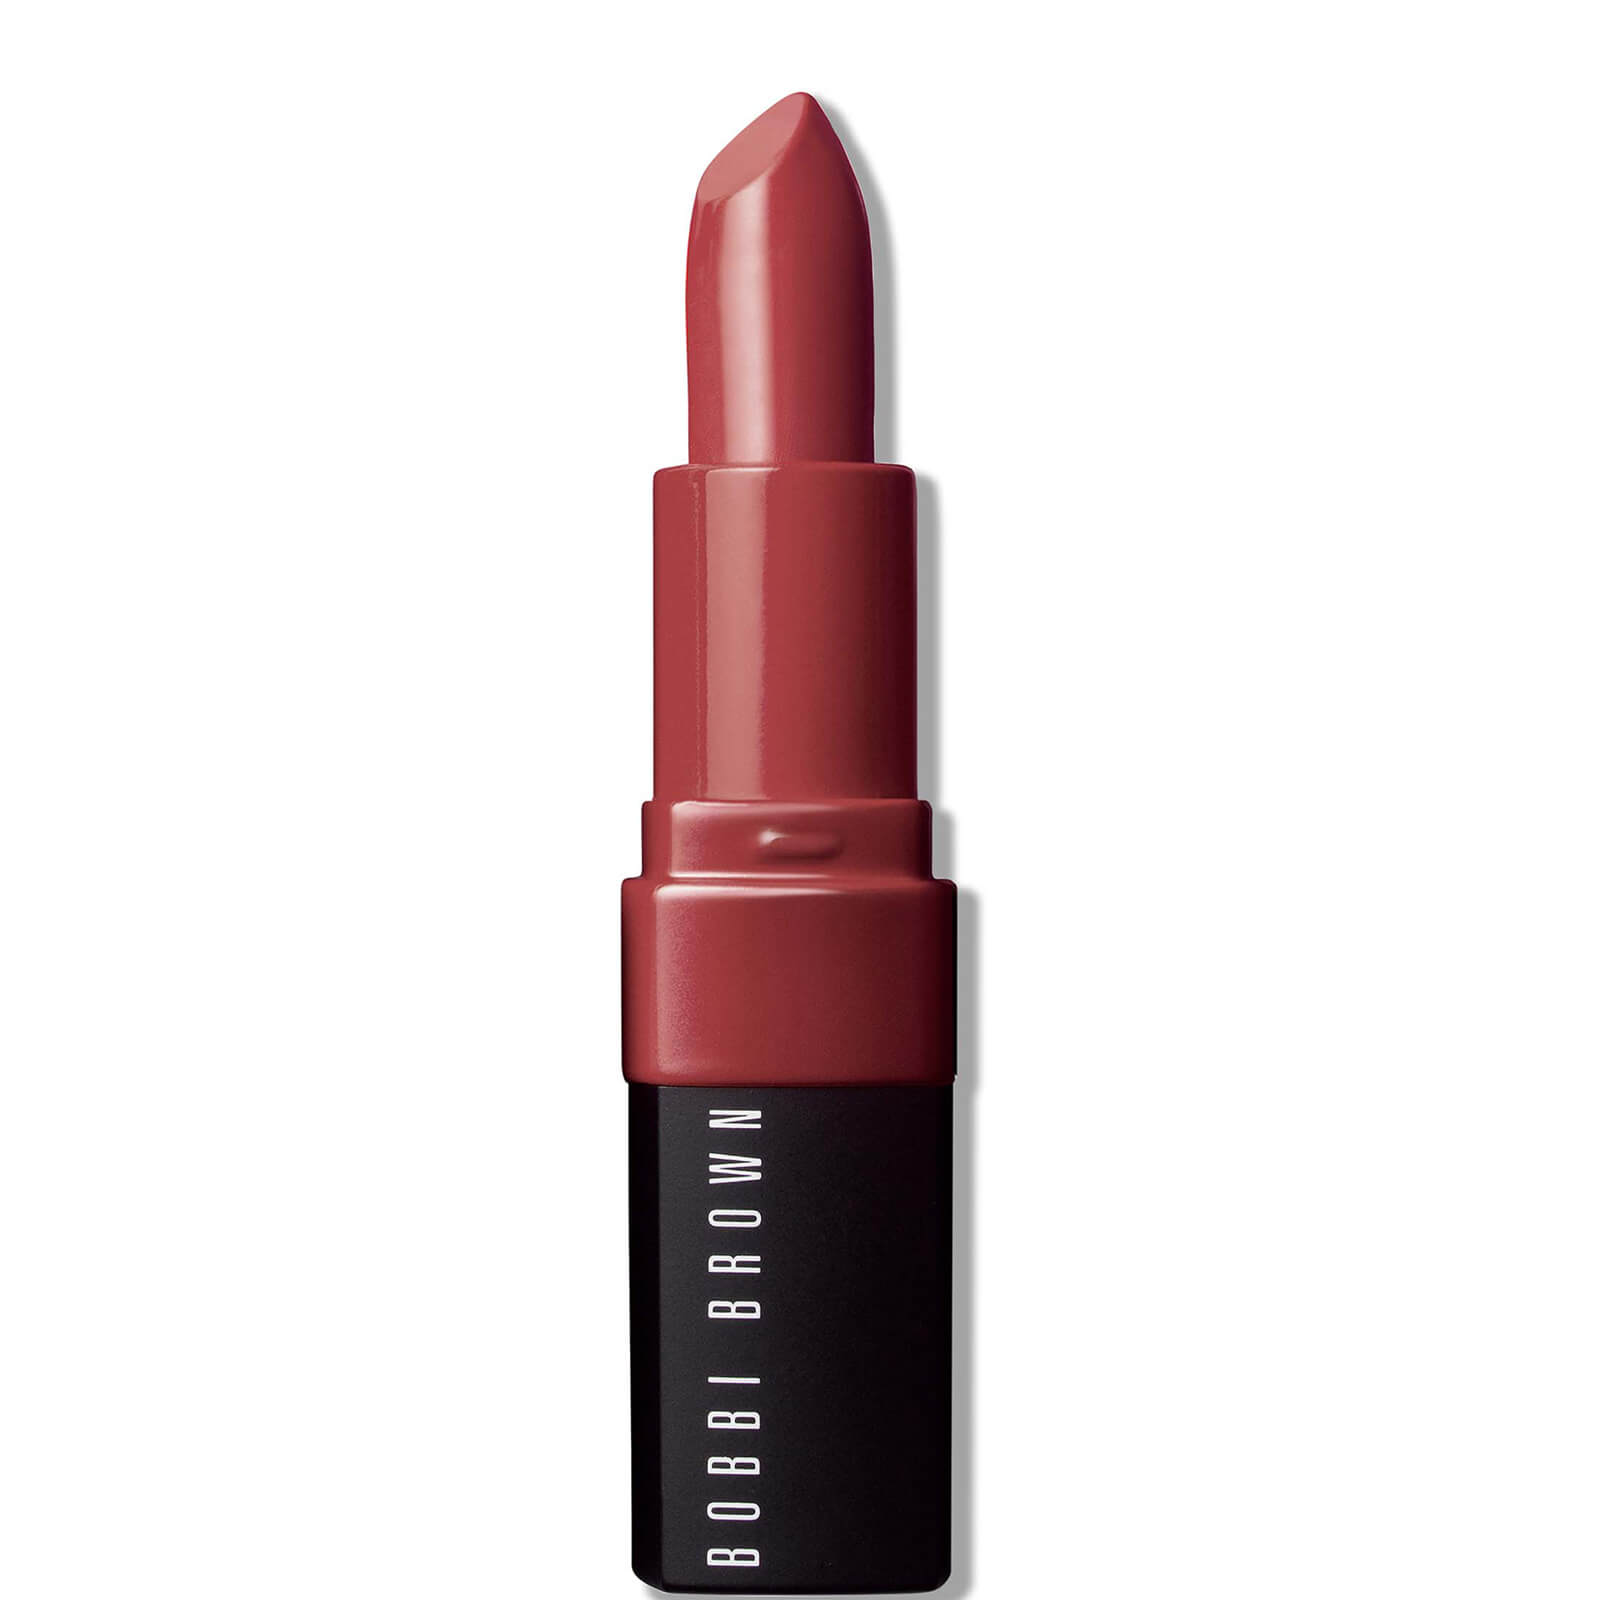 Bobbi Brown Crushed Lip Color 3.4g (Various Shades) - Cranberry